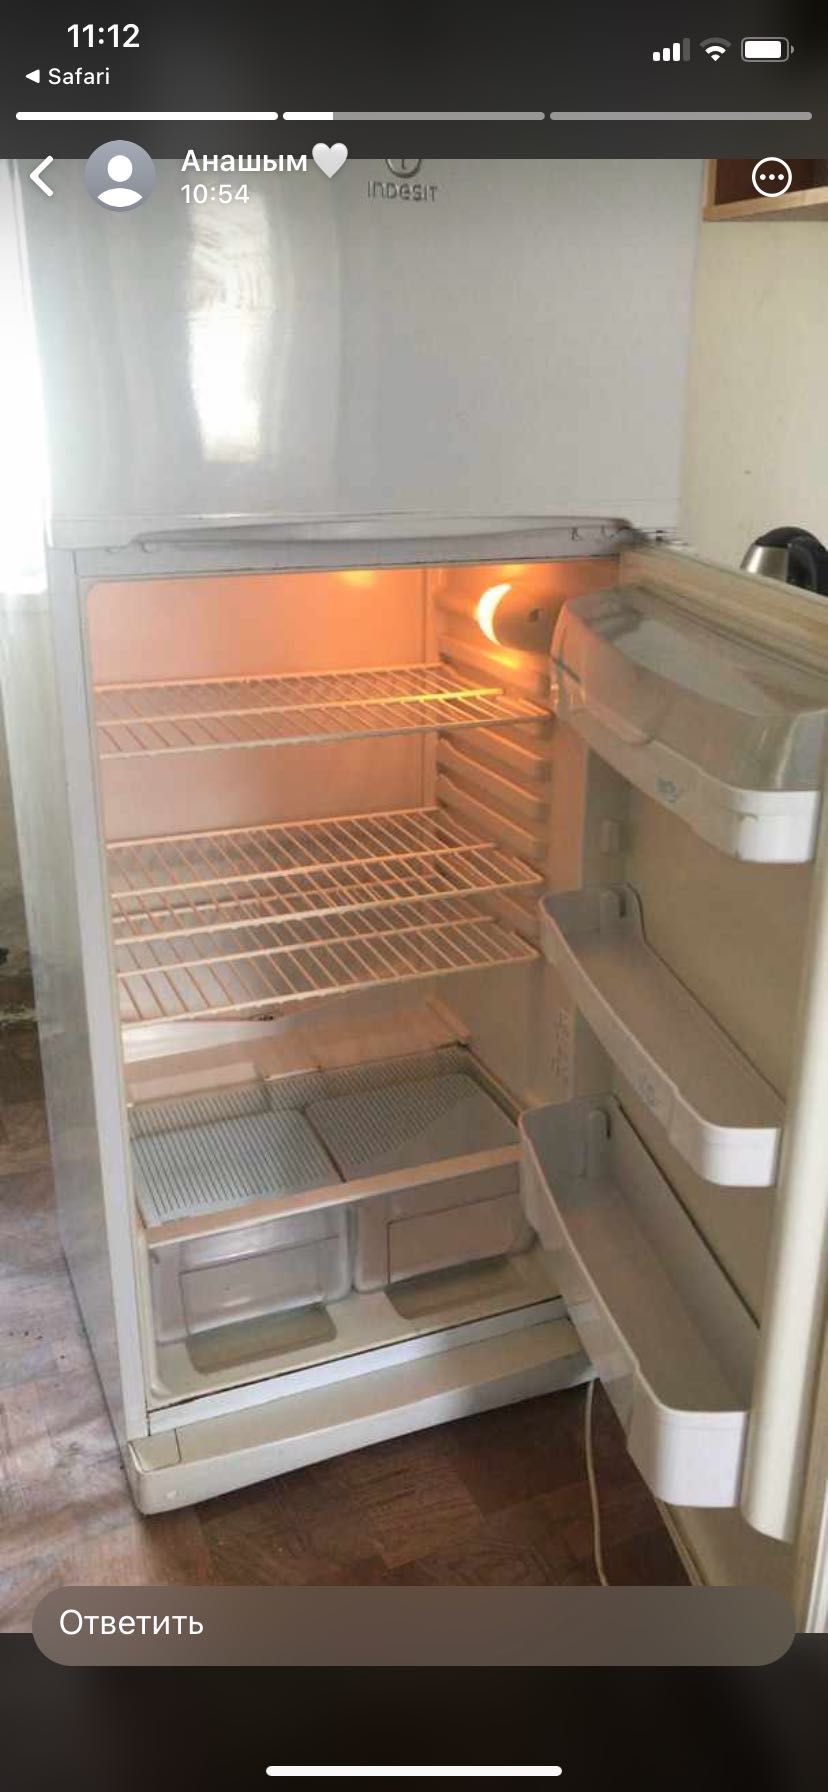 Холодильник за 35.000